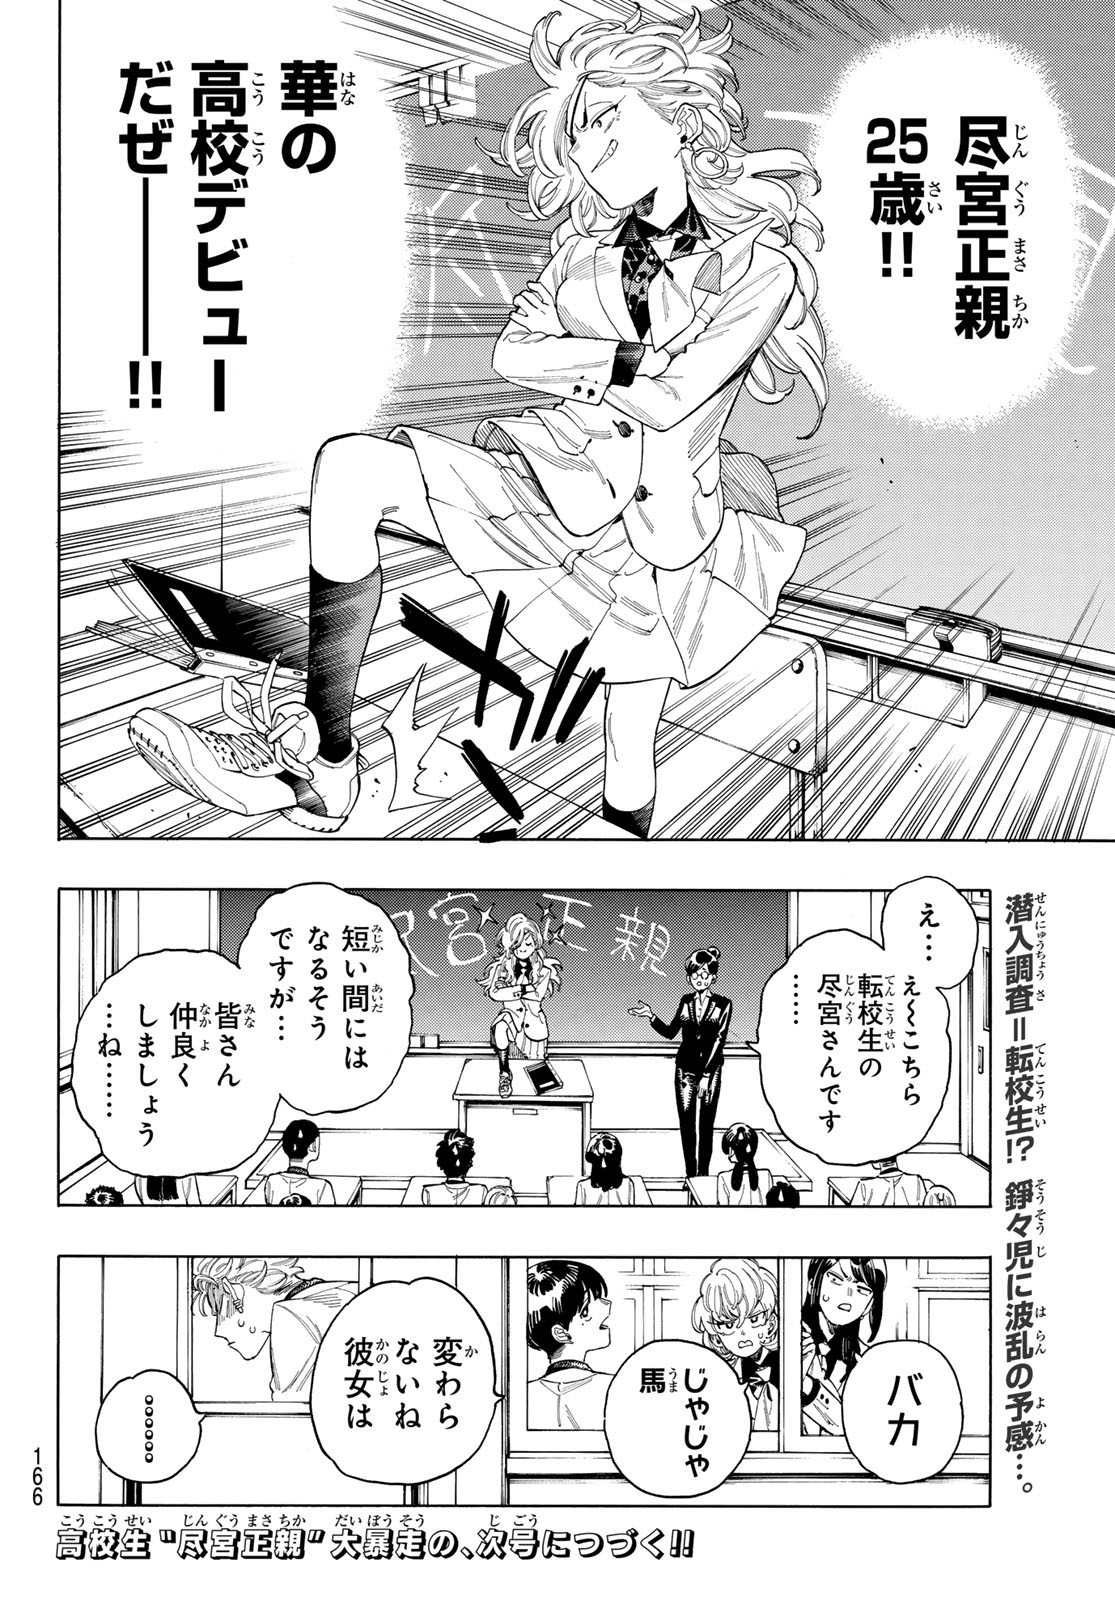 Akabane Honeko no Bodyguard - Chapter 76 - Page 21